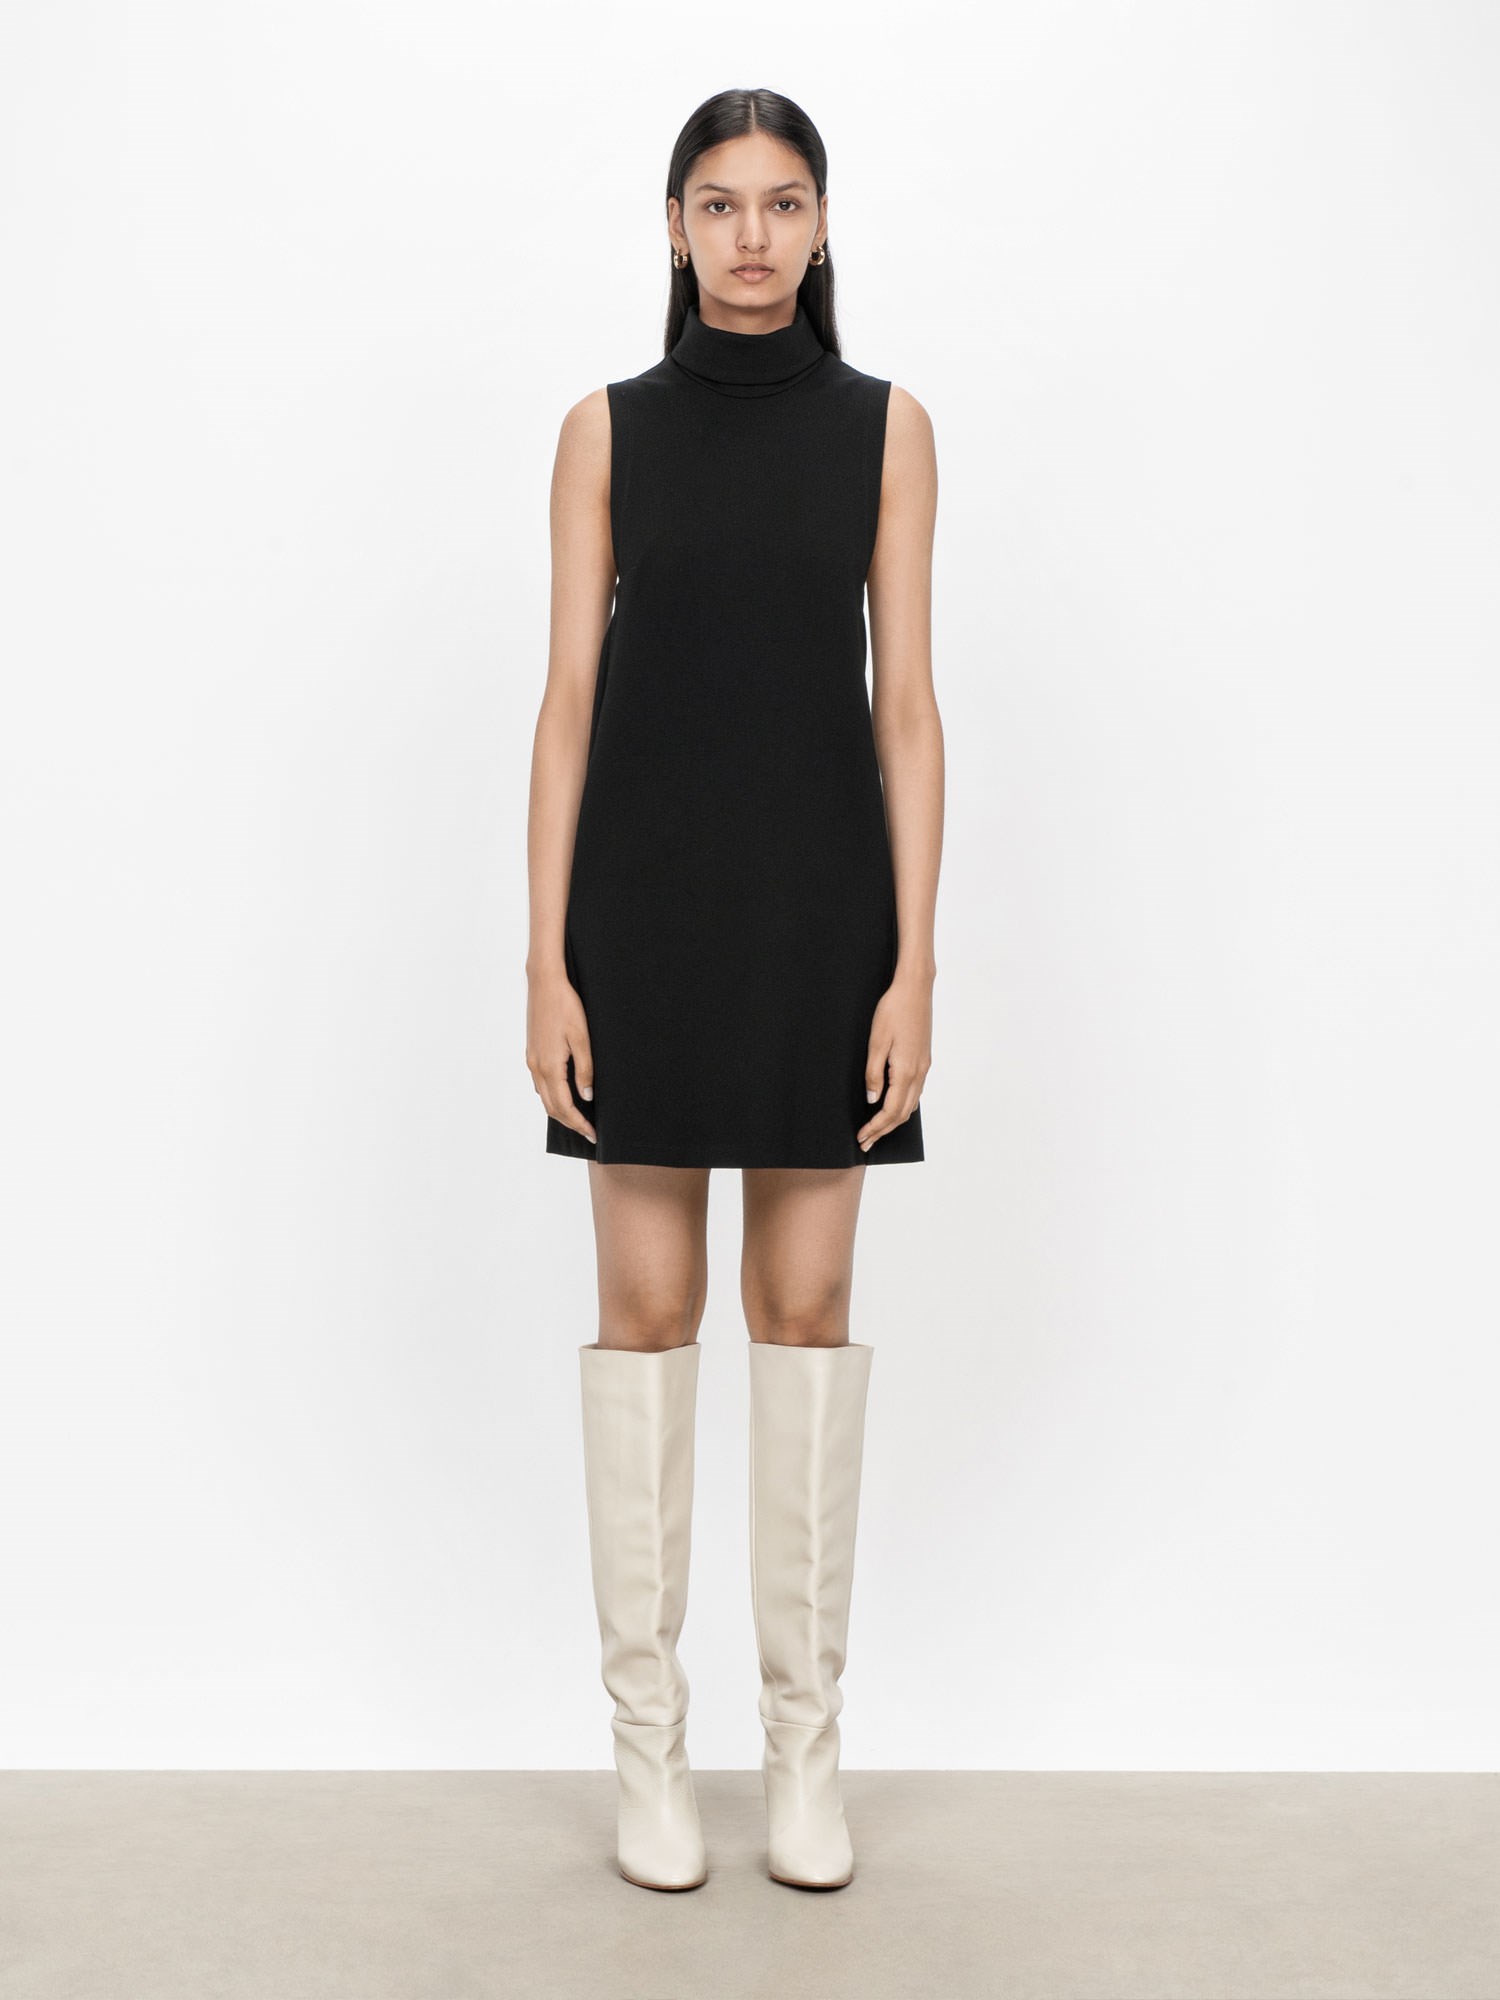 Double Knit Turtleneck Dress | Buy Dresses Online - Veronika Maine